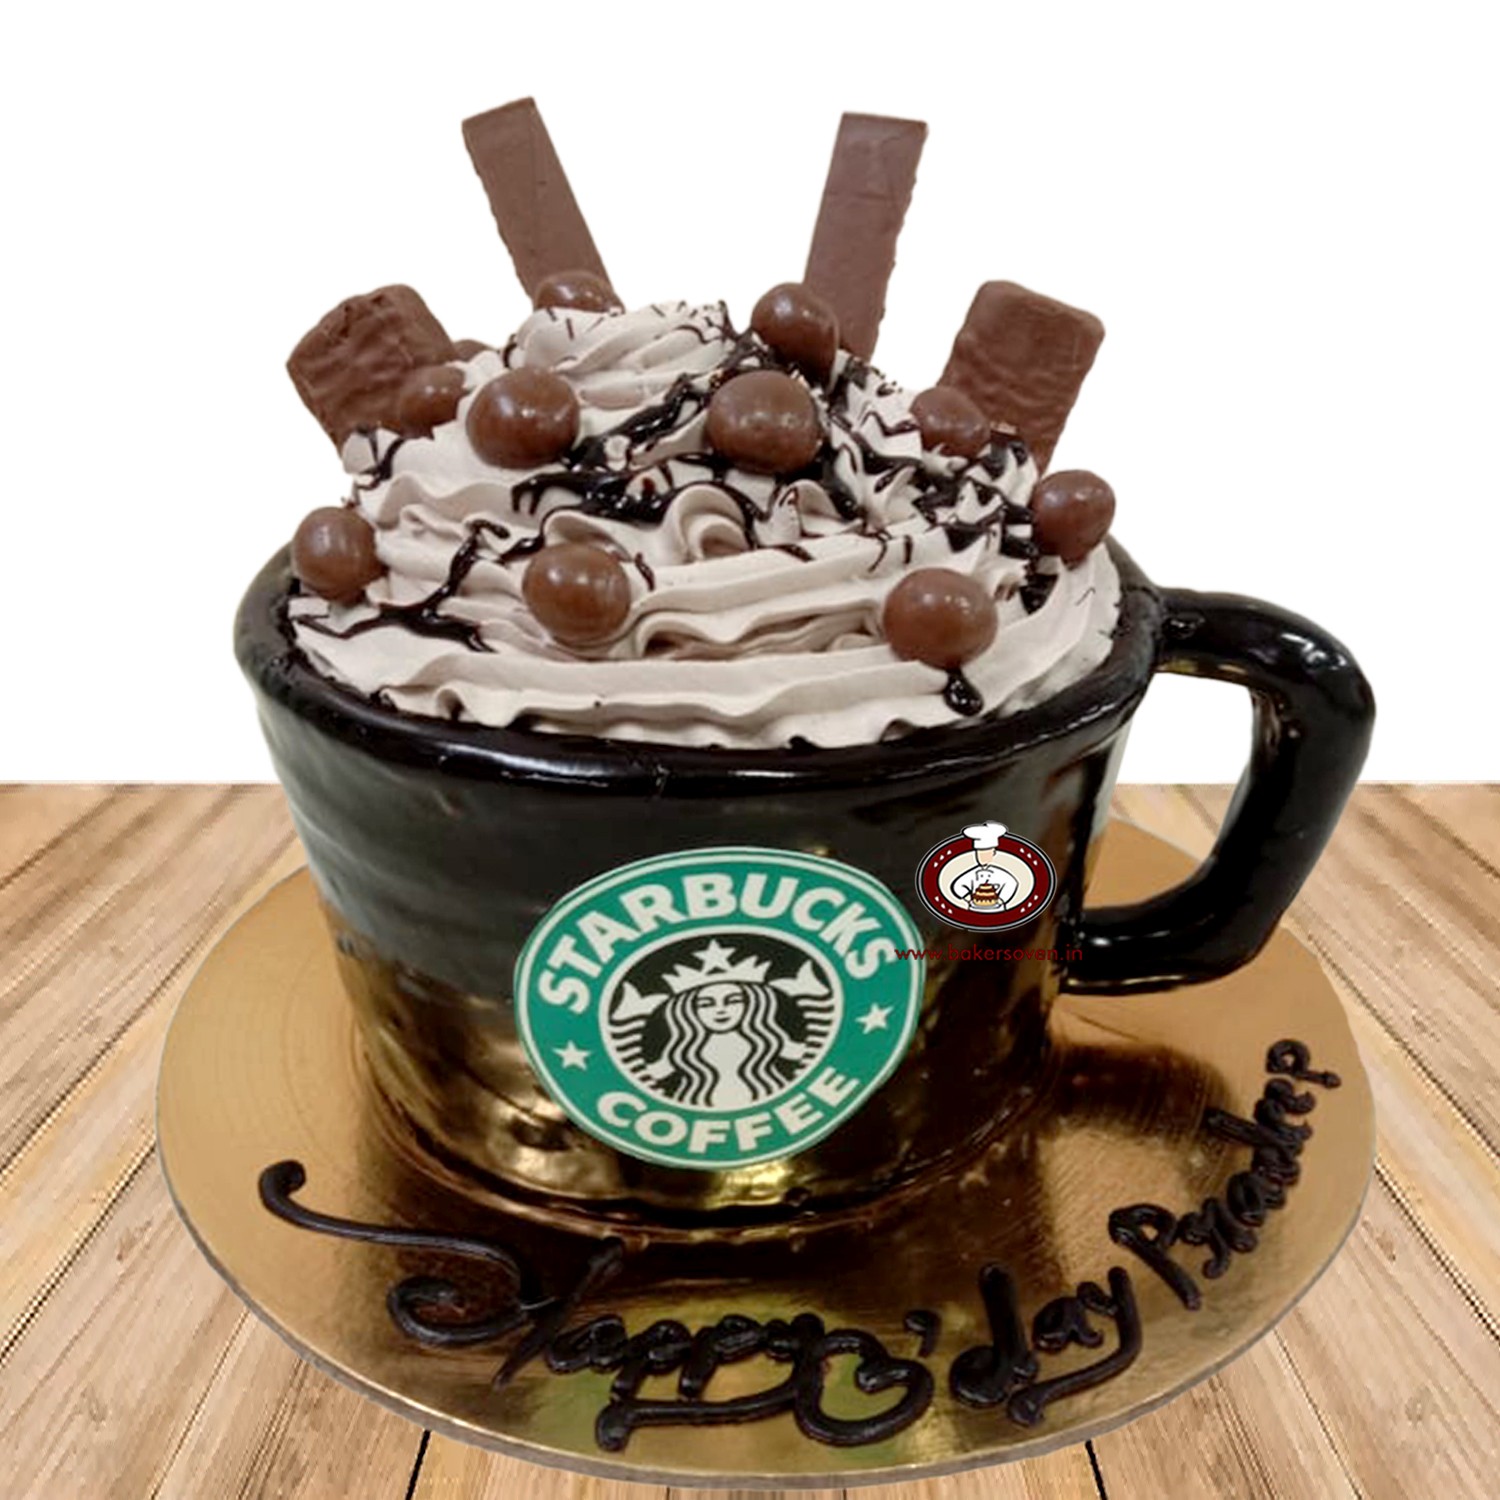 Starbucks-Inspired Cupcake | Order Online | Oh My Cake!